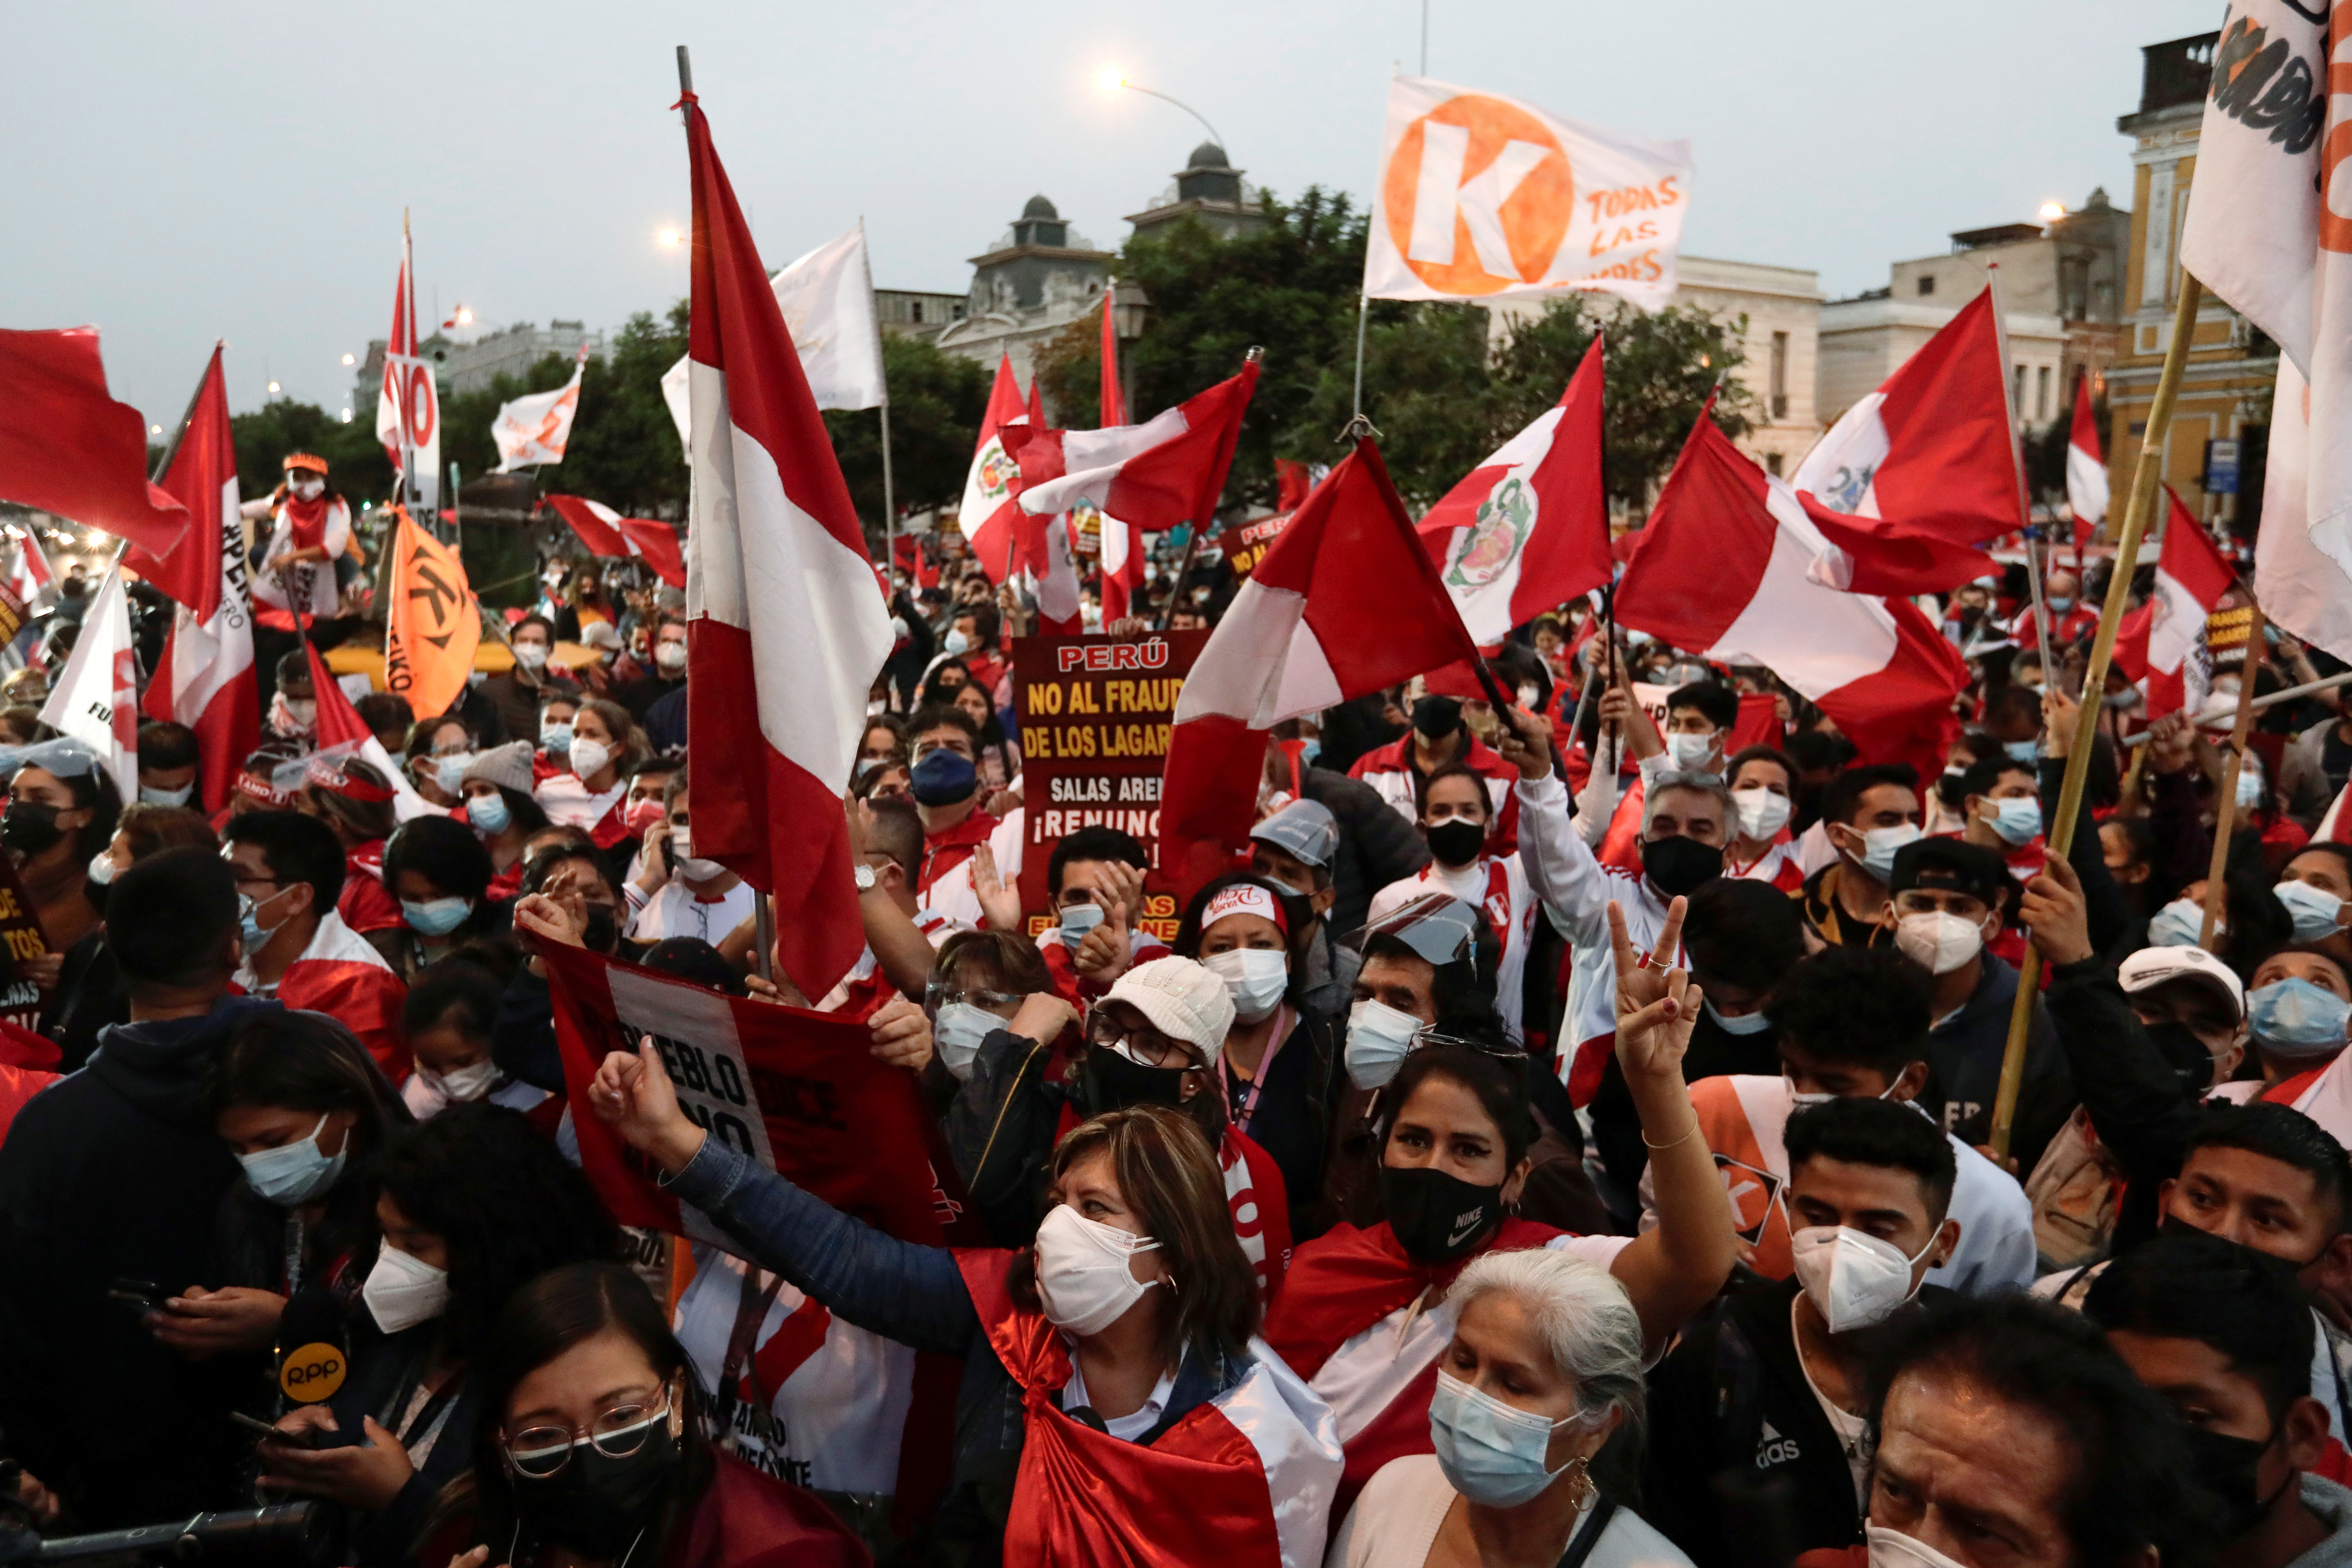 Supporters of Peru's presidential candidate Fujimori gather in Lima